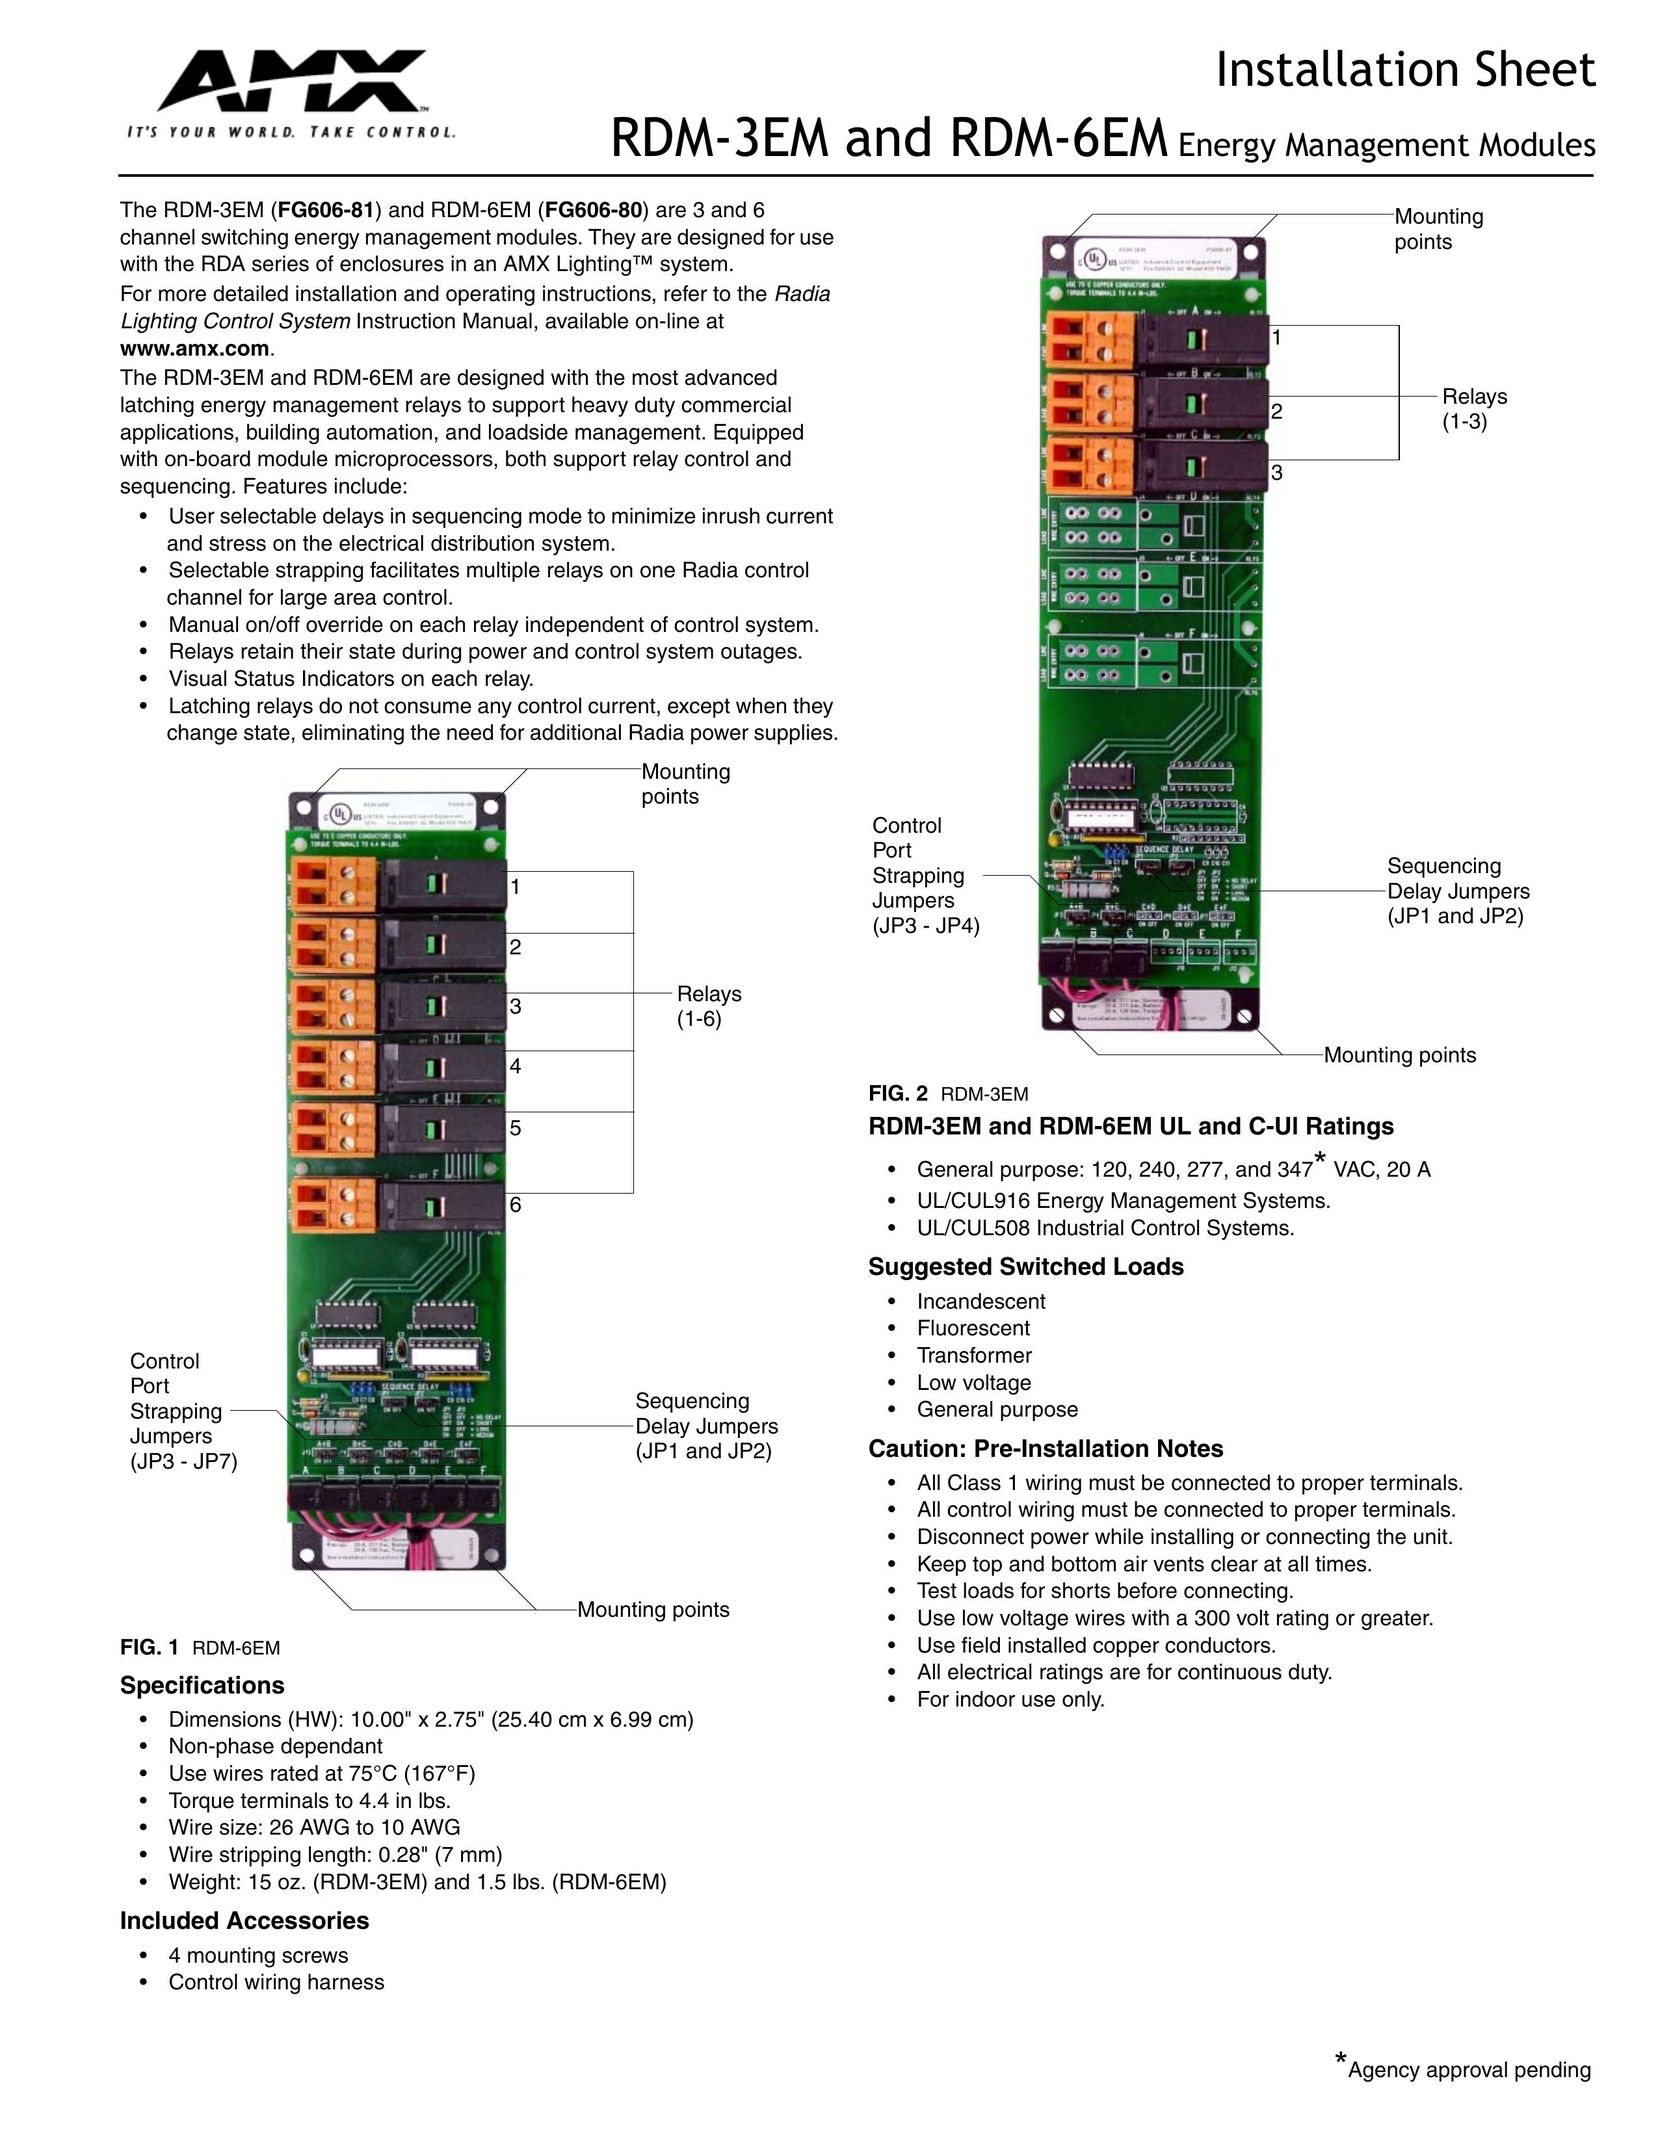 AMX RDM-6EM Switch User Manual